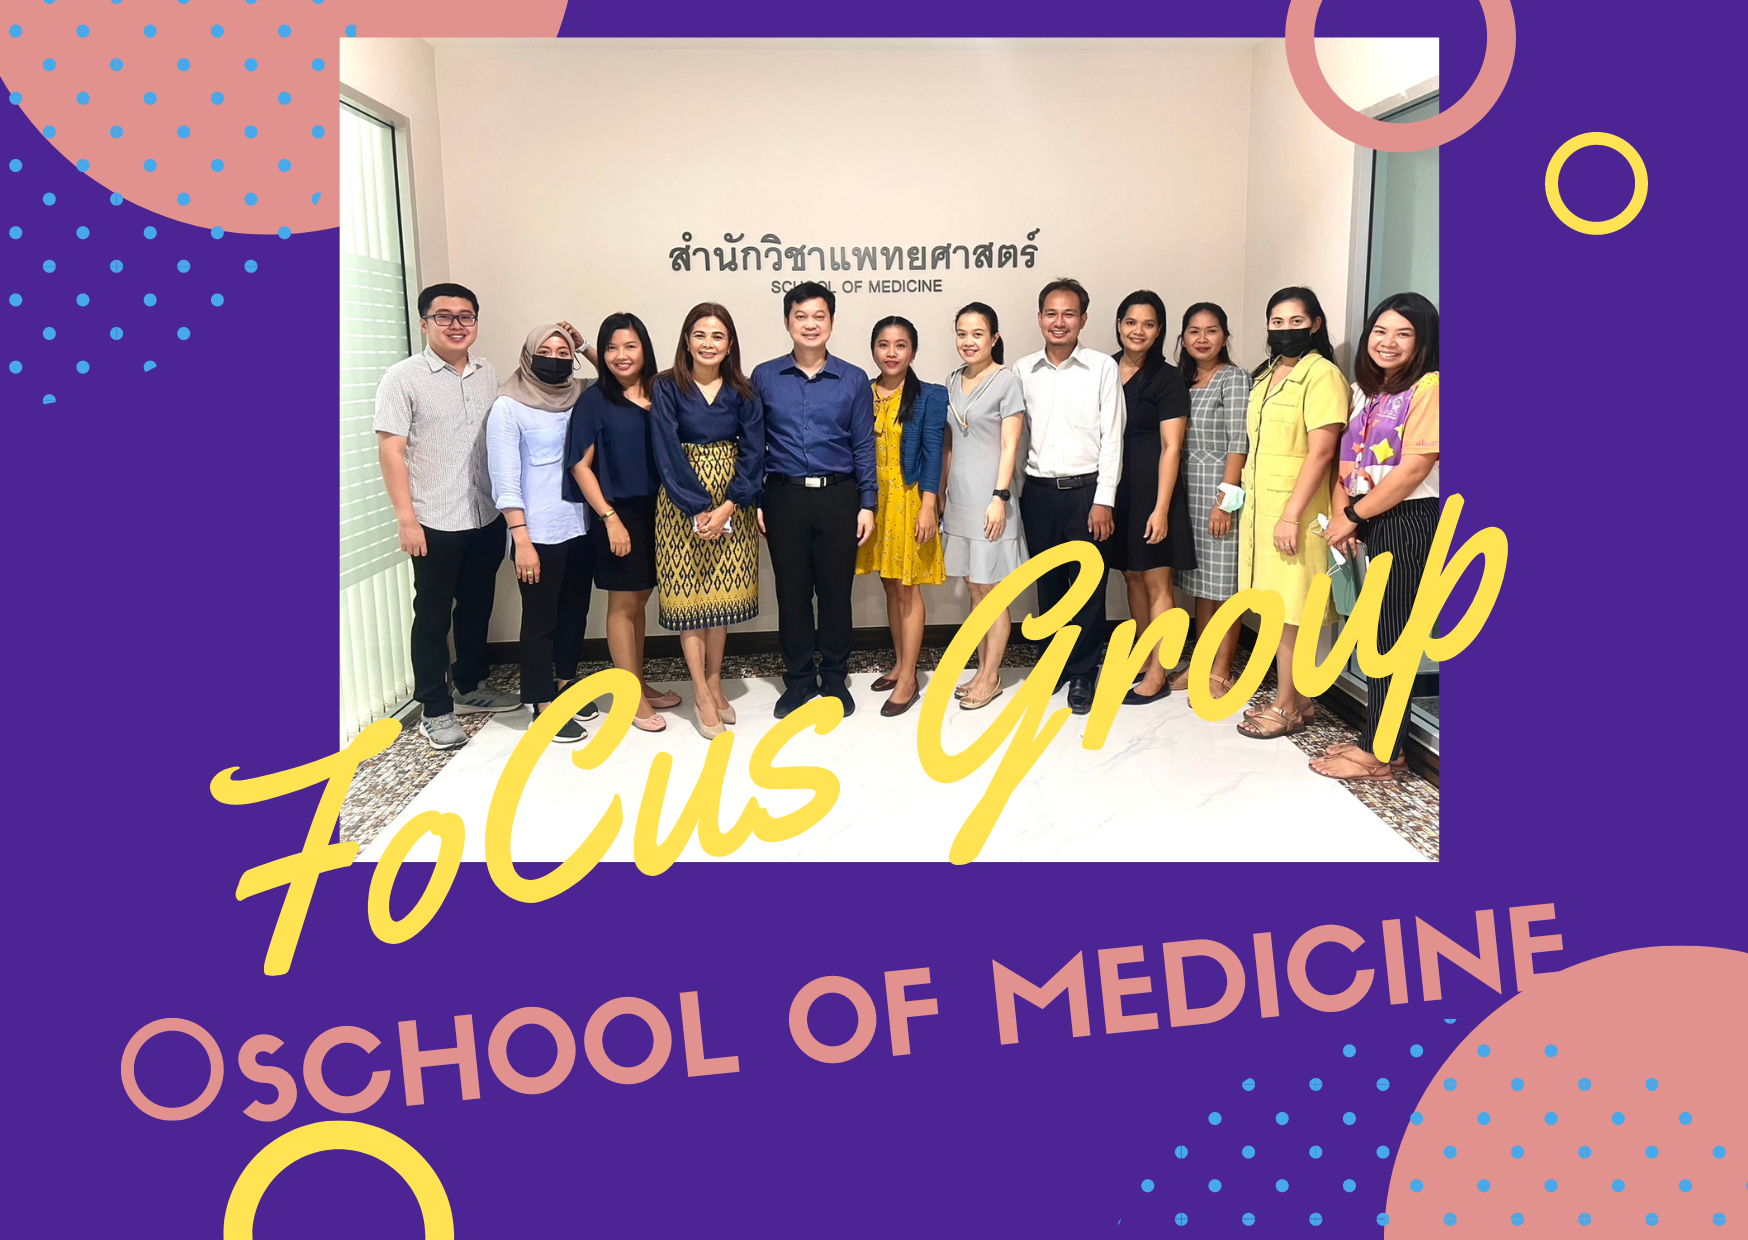 focus group school of medicine